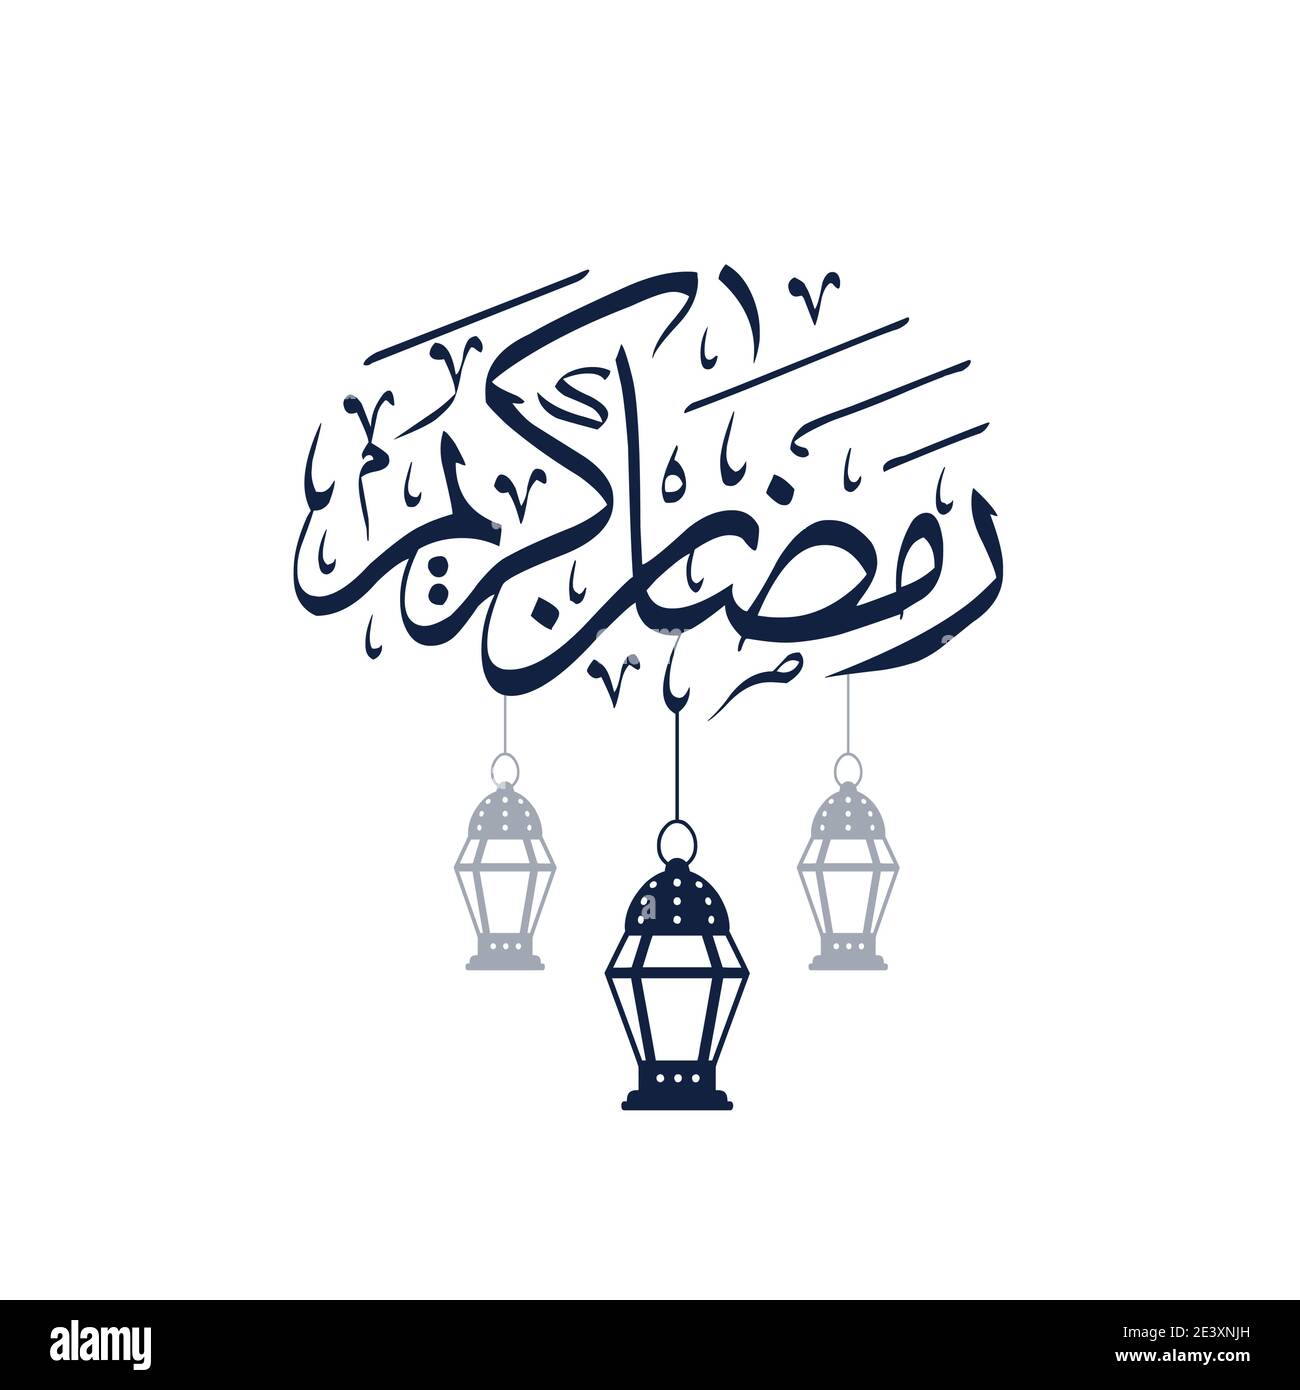 Ramadan mubarak greeting card vector design Stock Vector Image ...